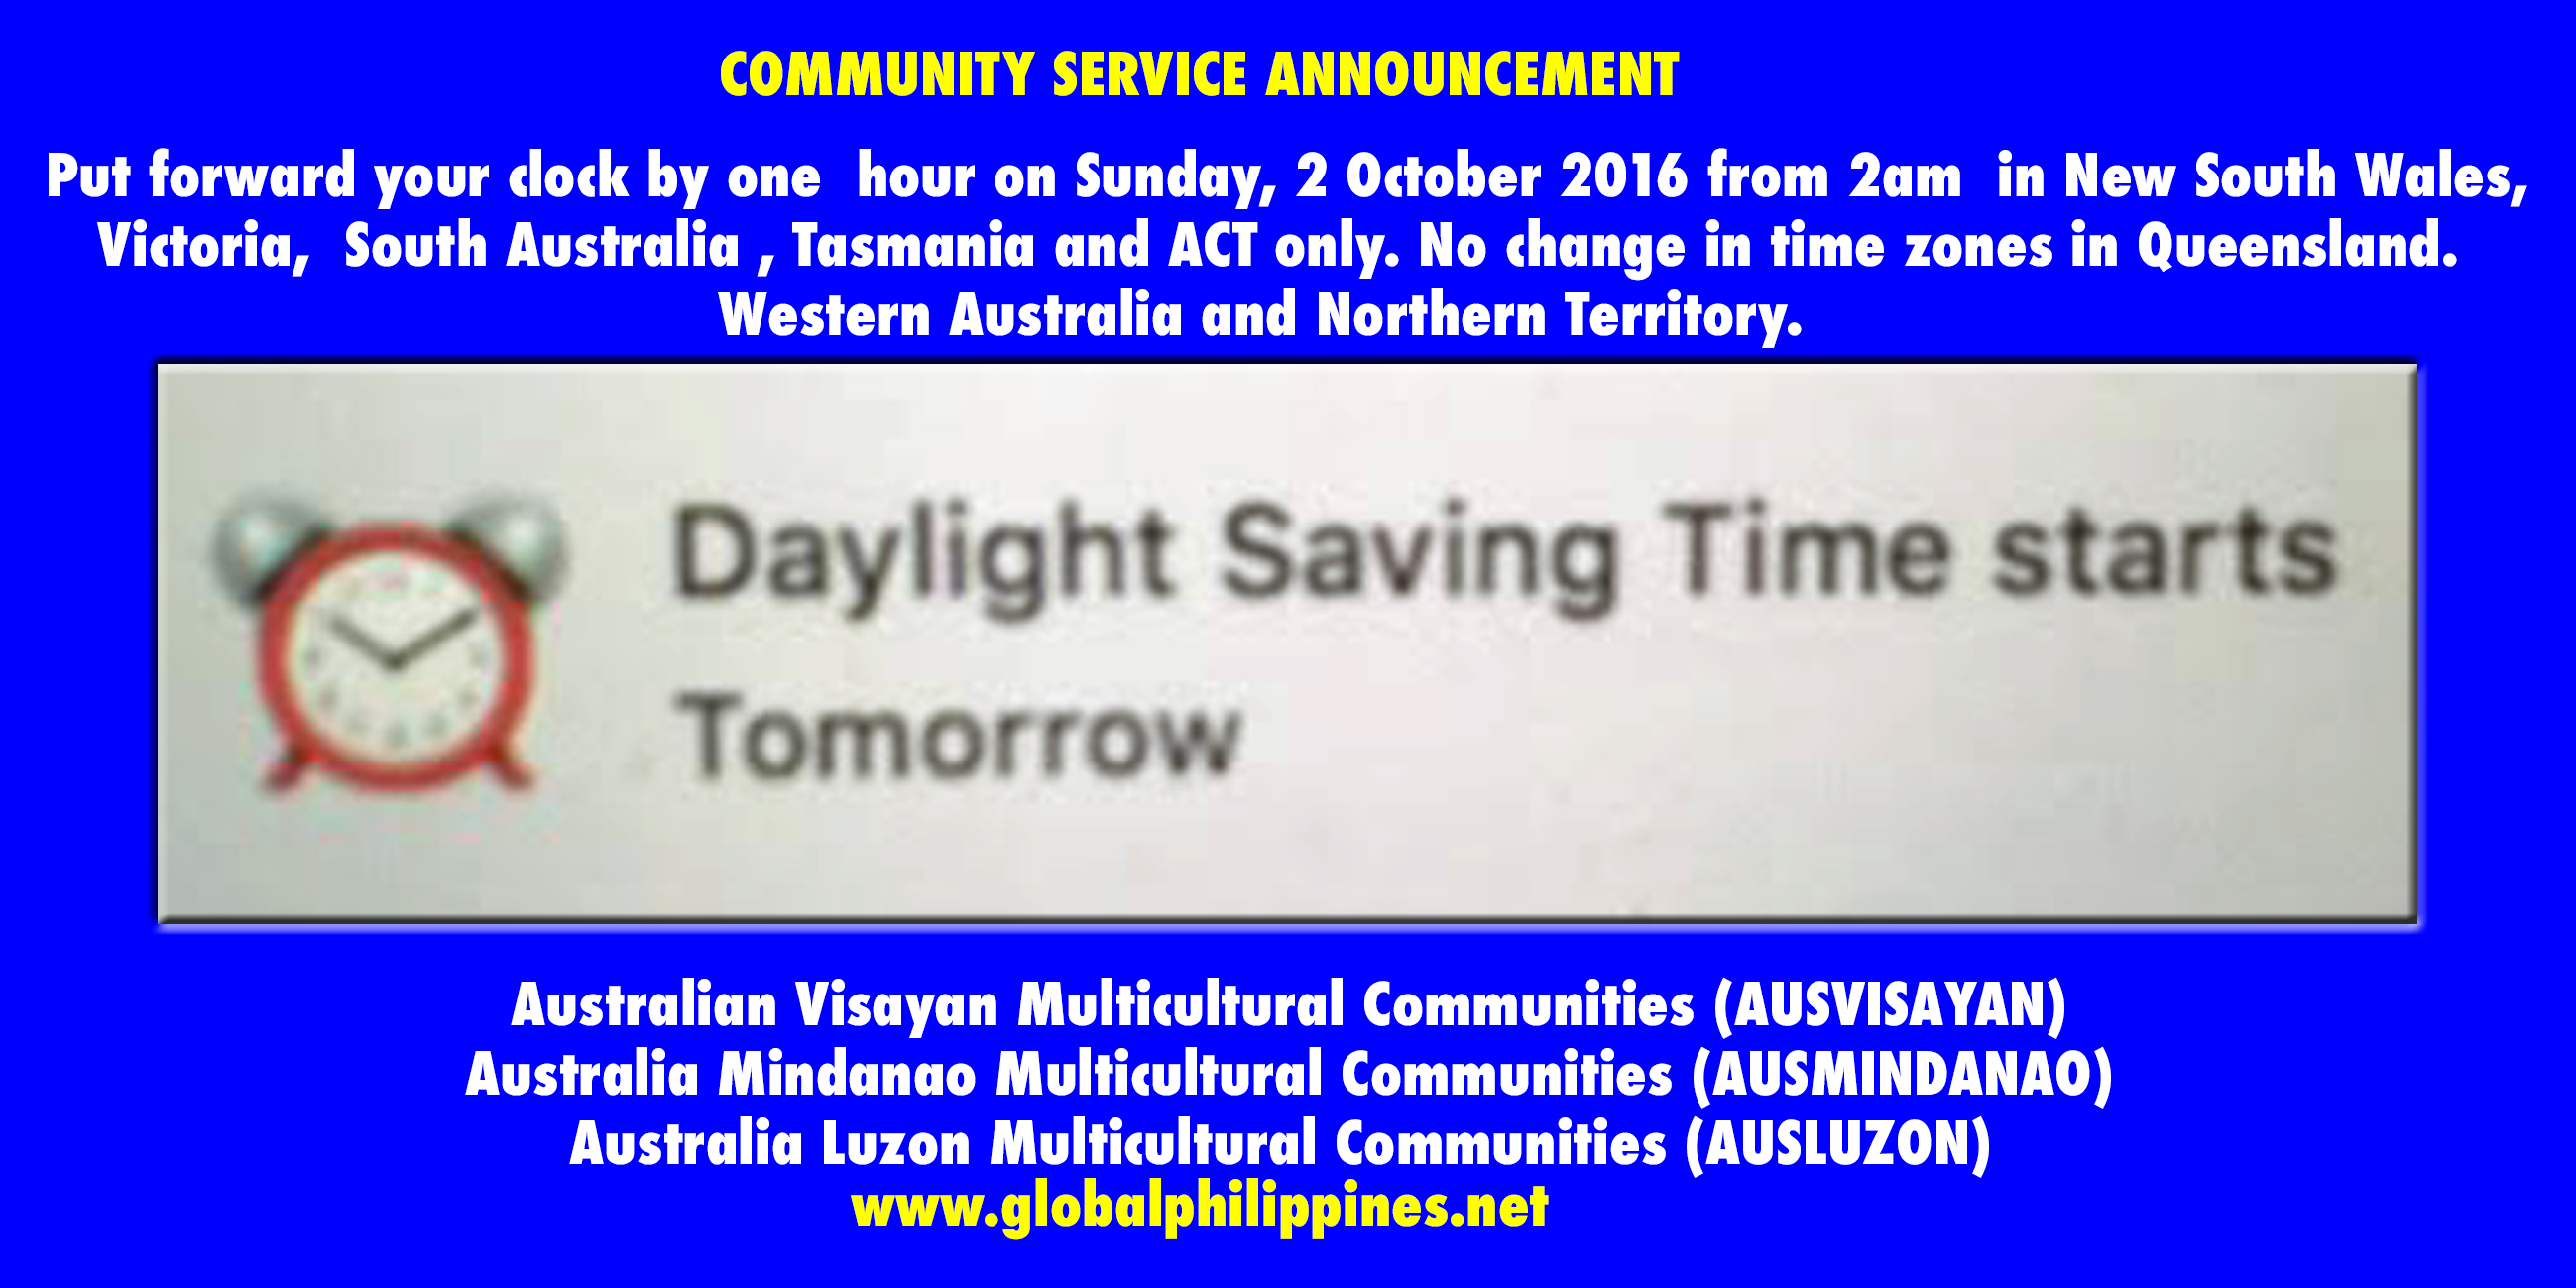 Daylight saving time starts tomorrow in Australia